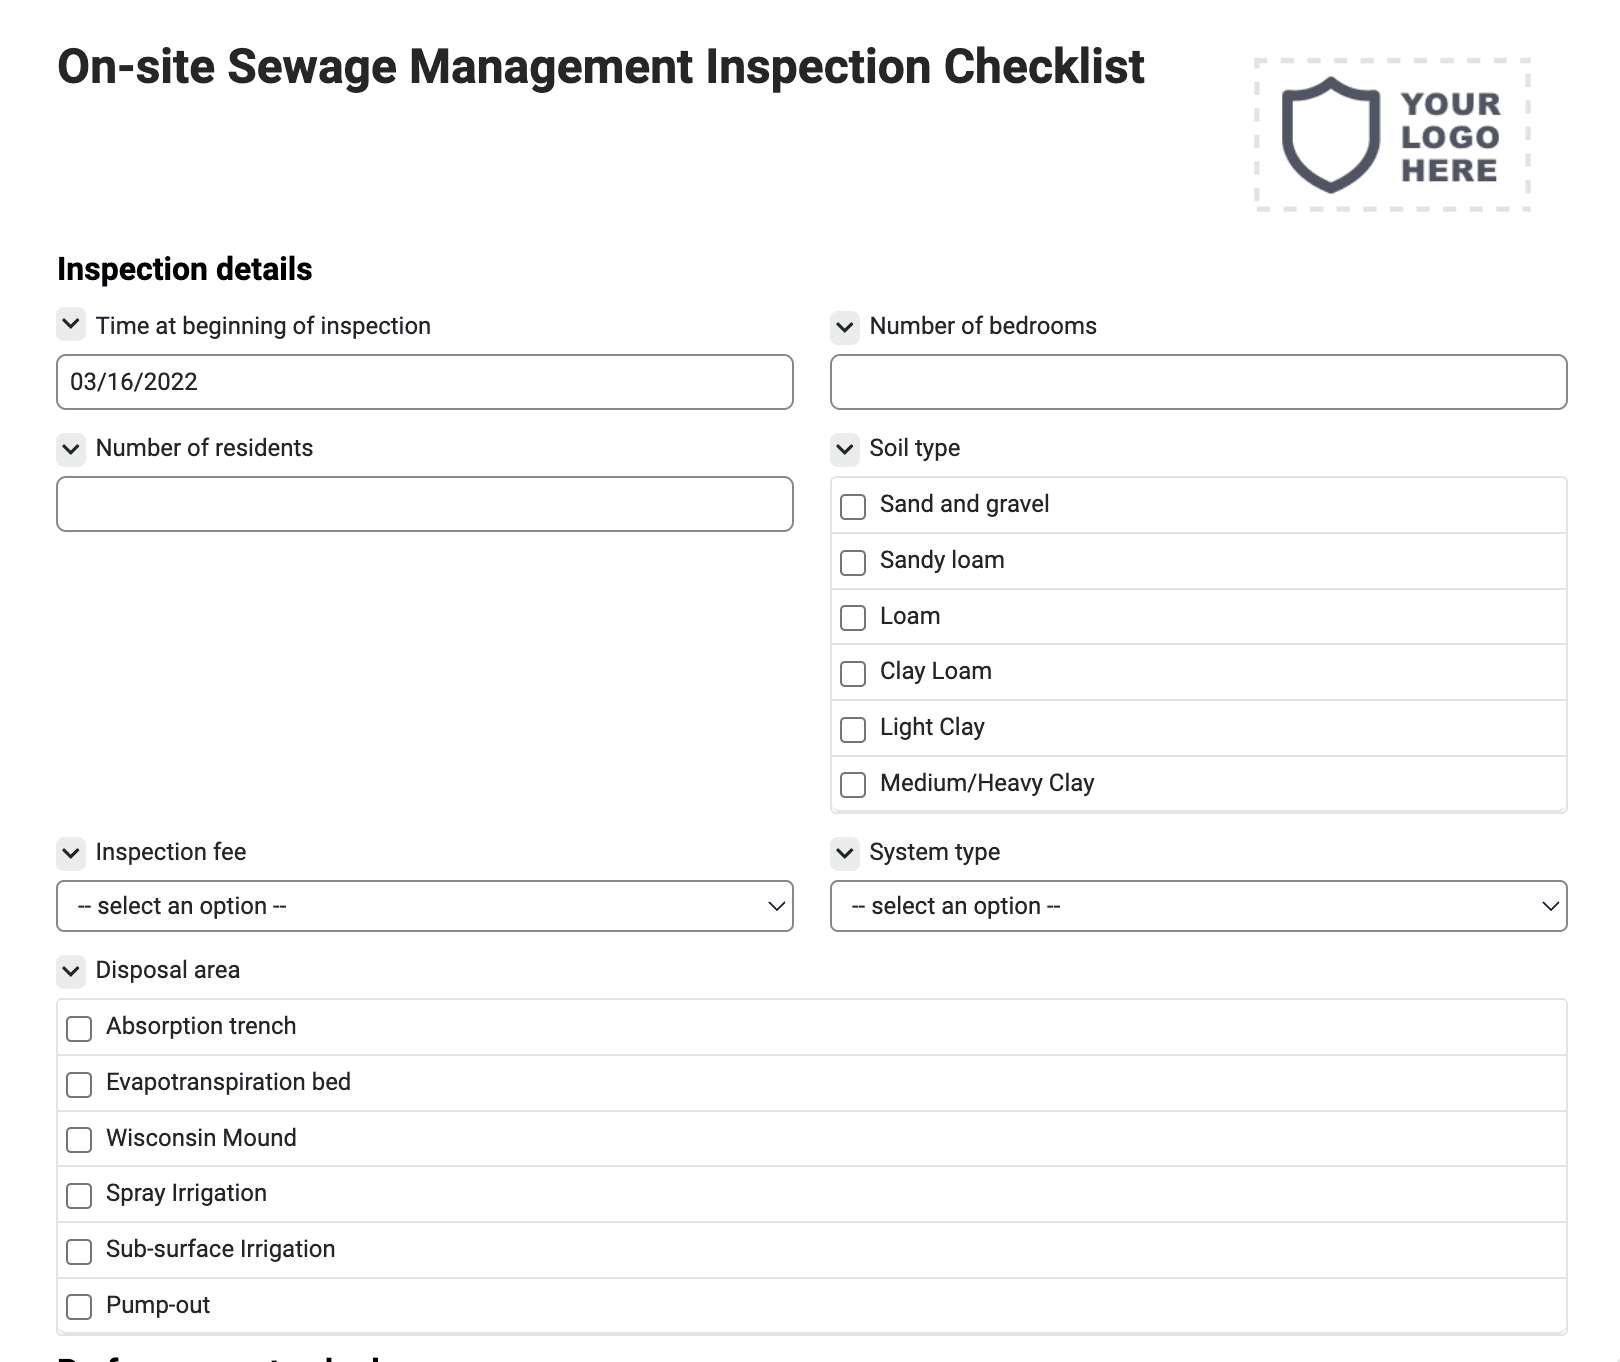 On-site Sewage Management Inspection Checklist